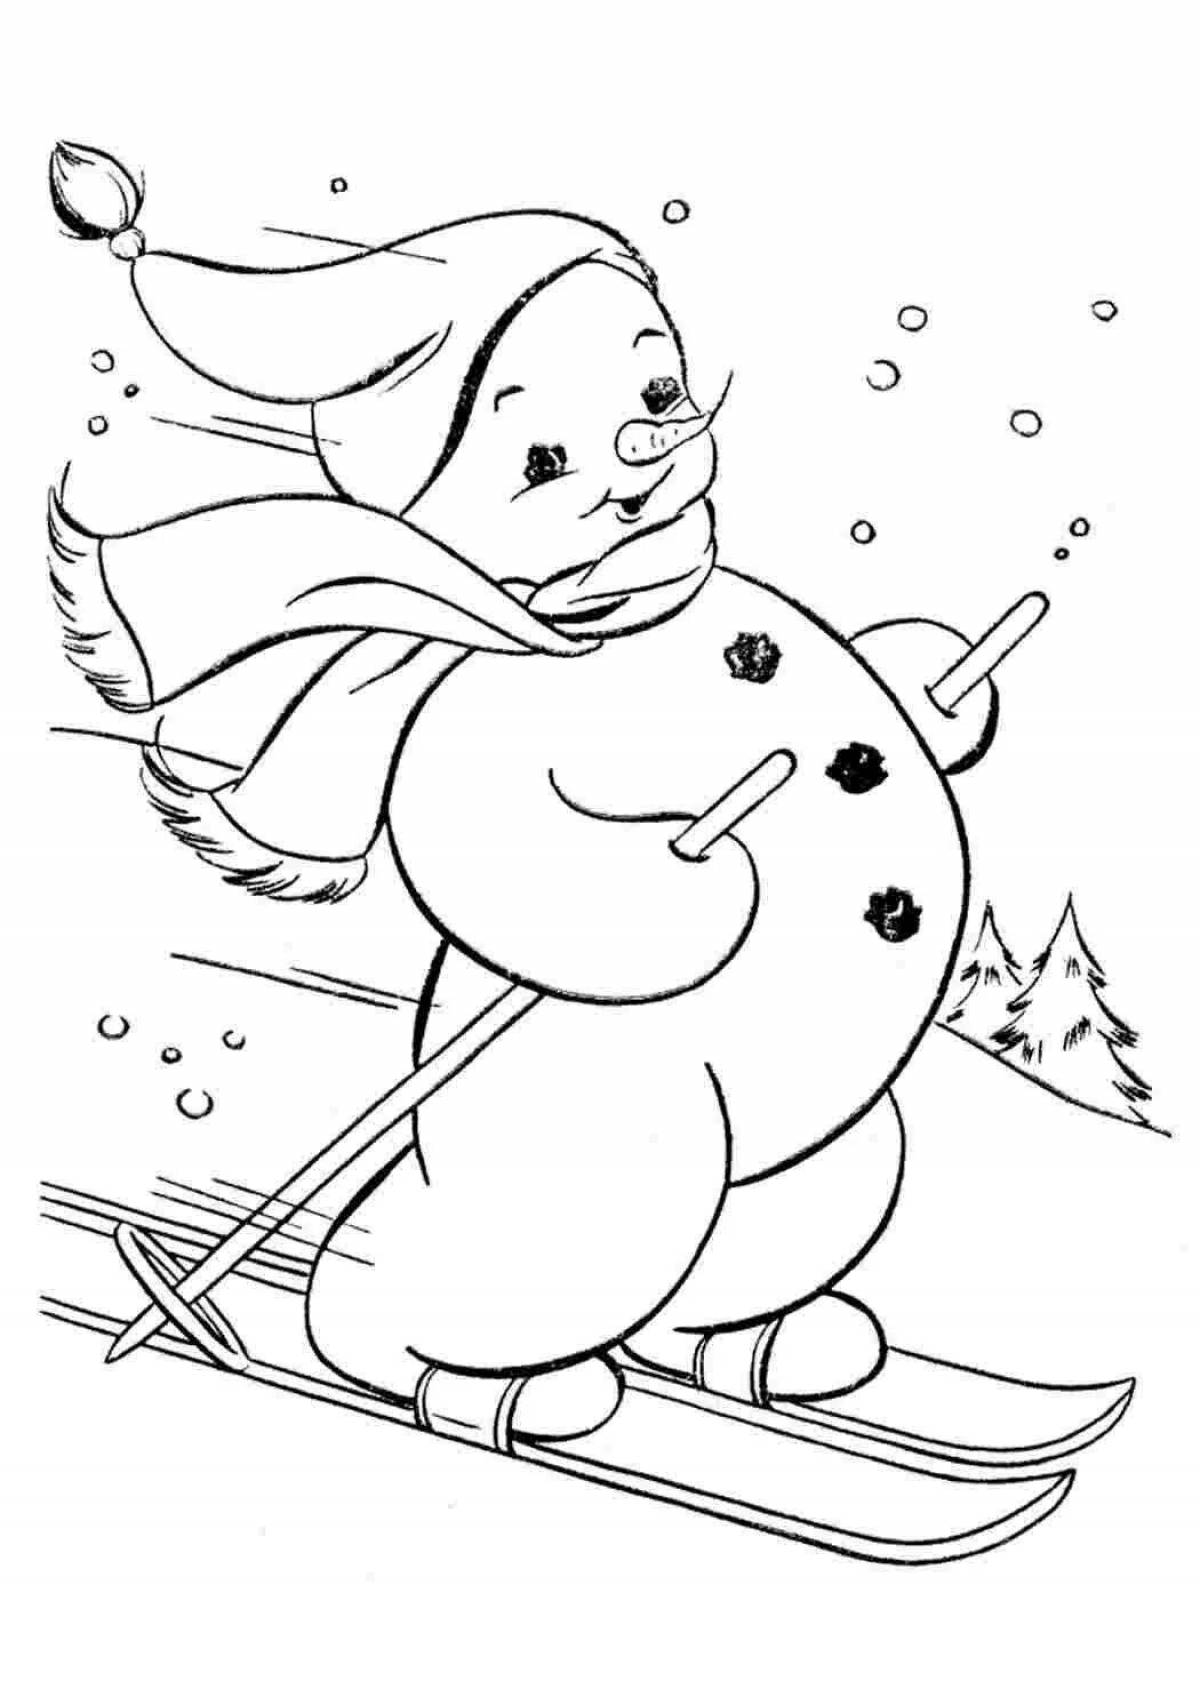 Snowman on skis #14